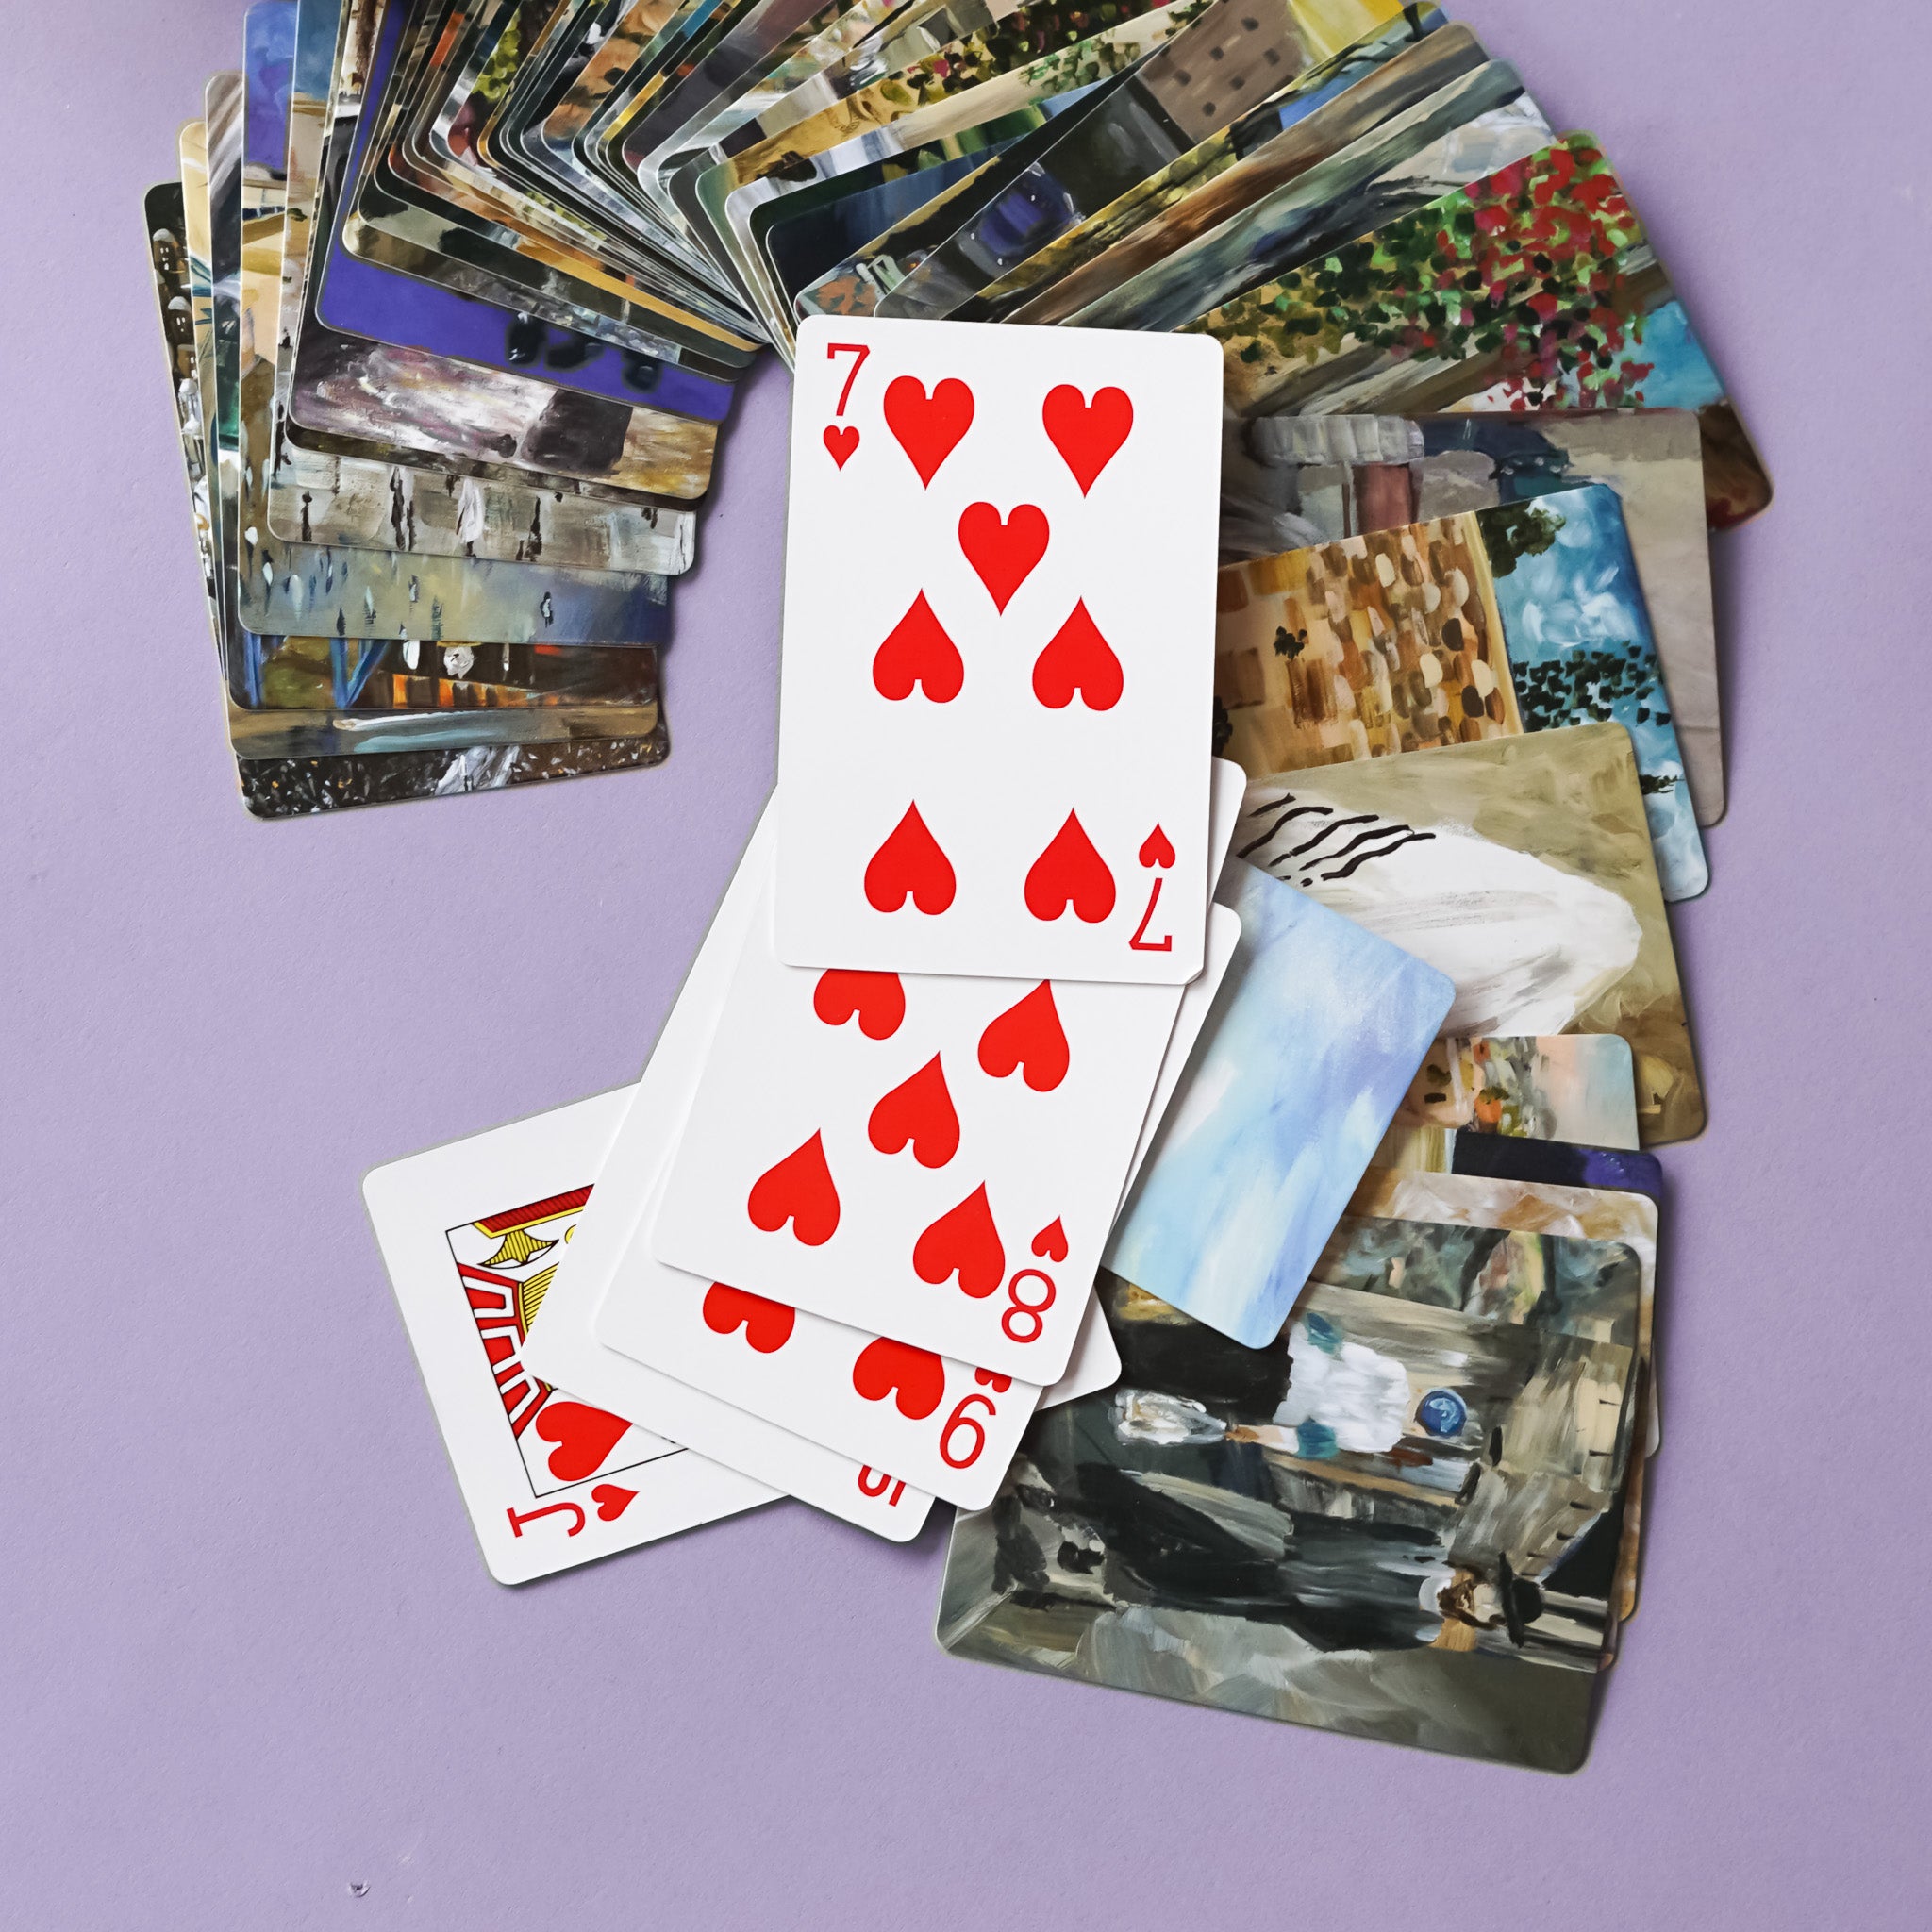 Jerusalem SIngle Deck of Cards